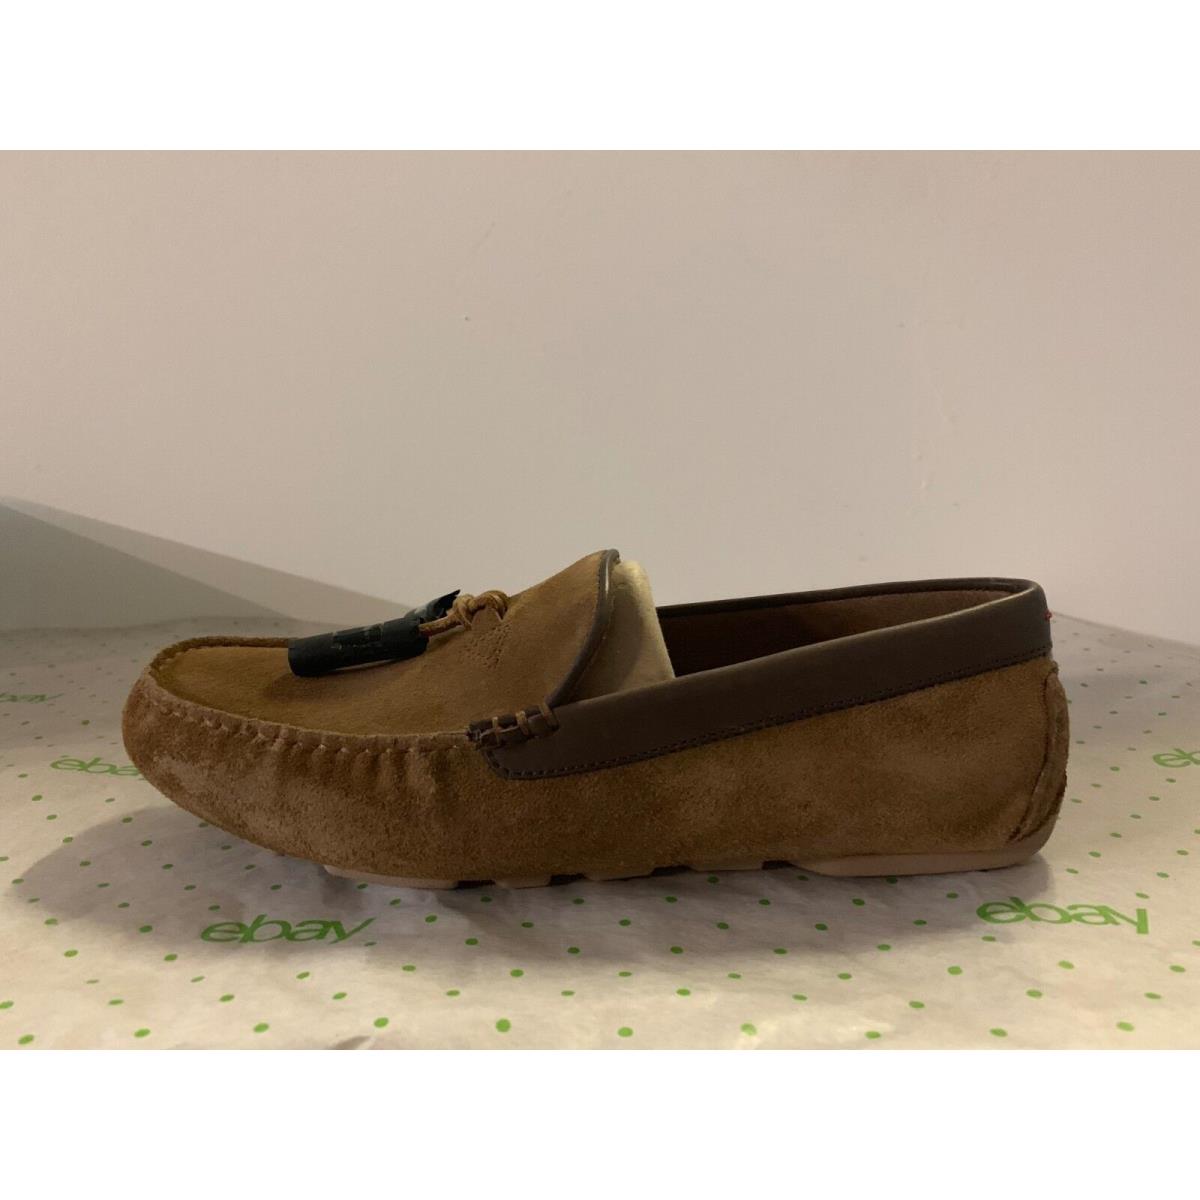 Ugg Australia Marris Men`s Driving Slip On Tassel Loafers Moccasins Suede Shoes